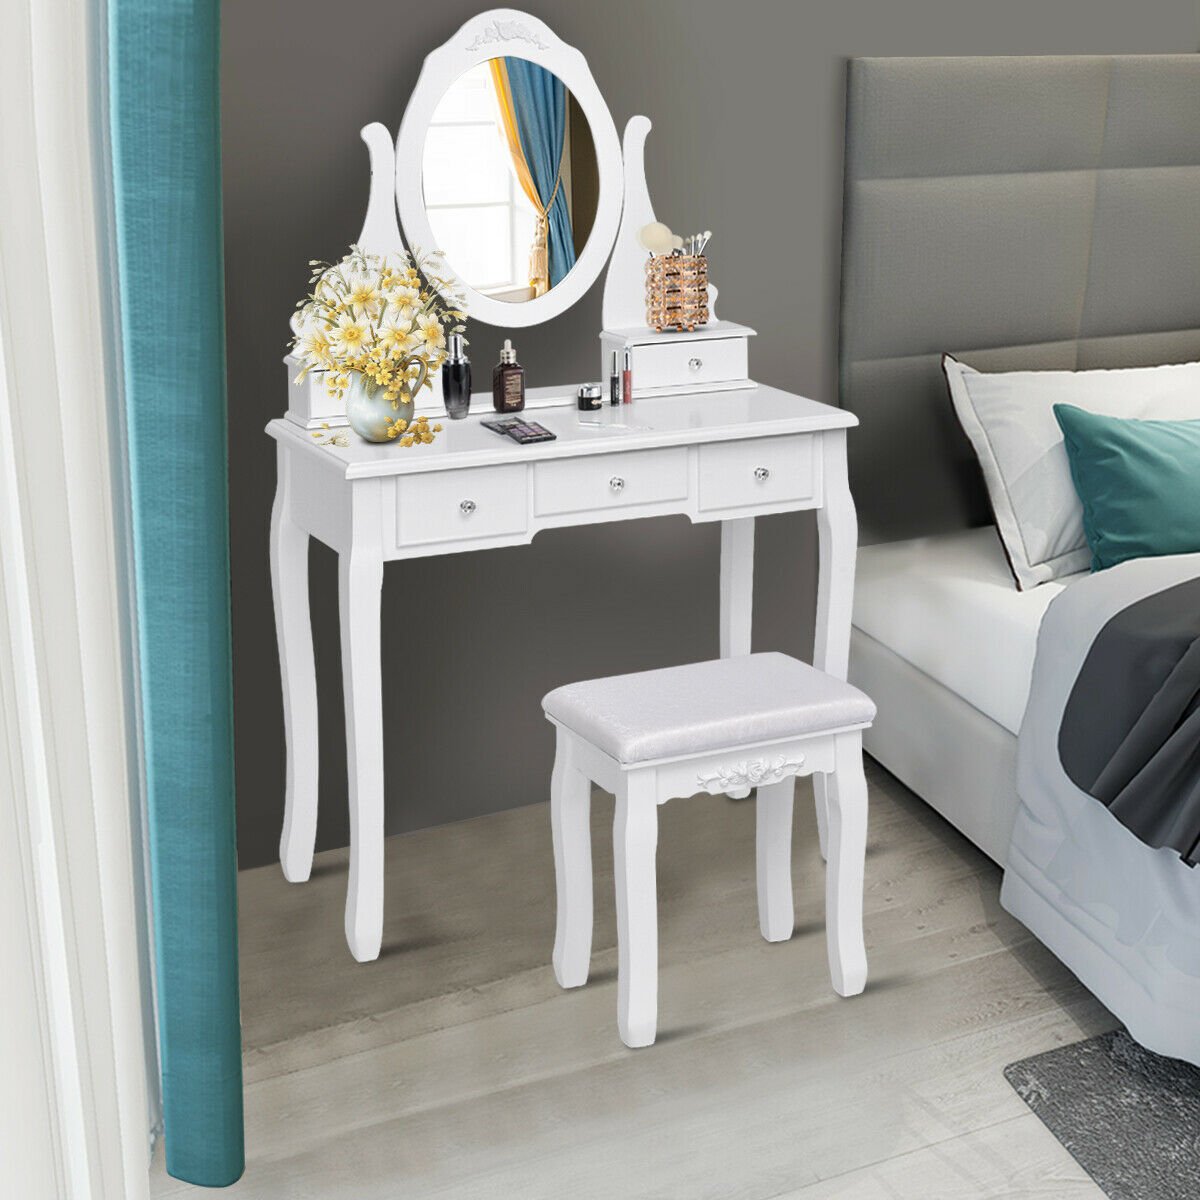 Bedroom Wooden Mirrored Makeup Vanity Set Stool Table Set White 5 Drawers